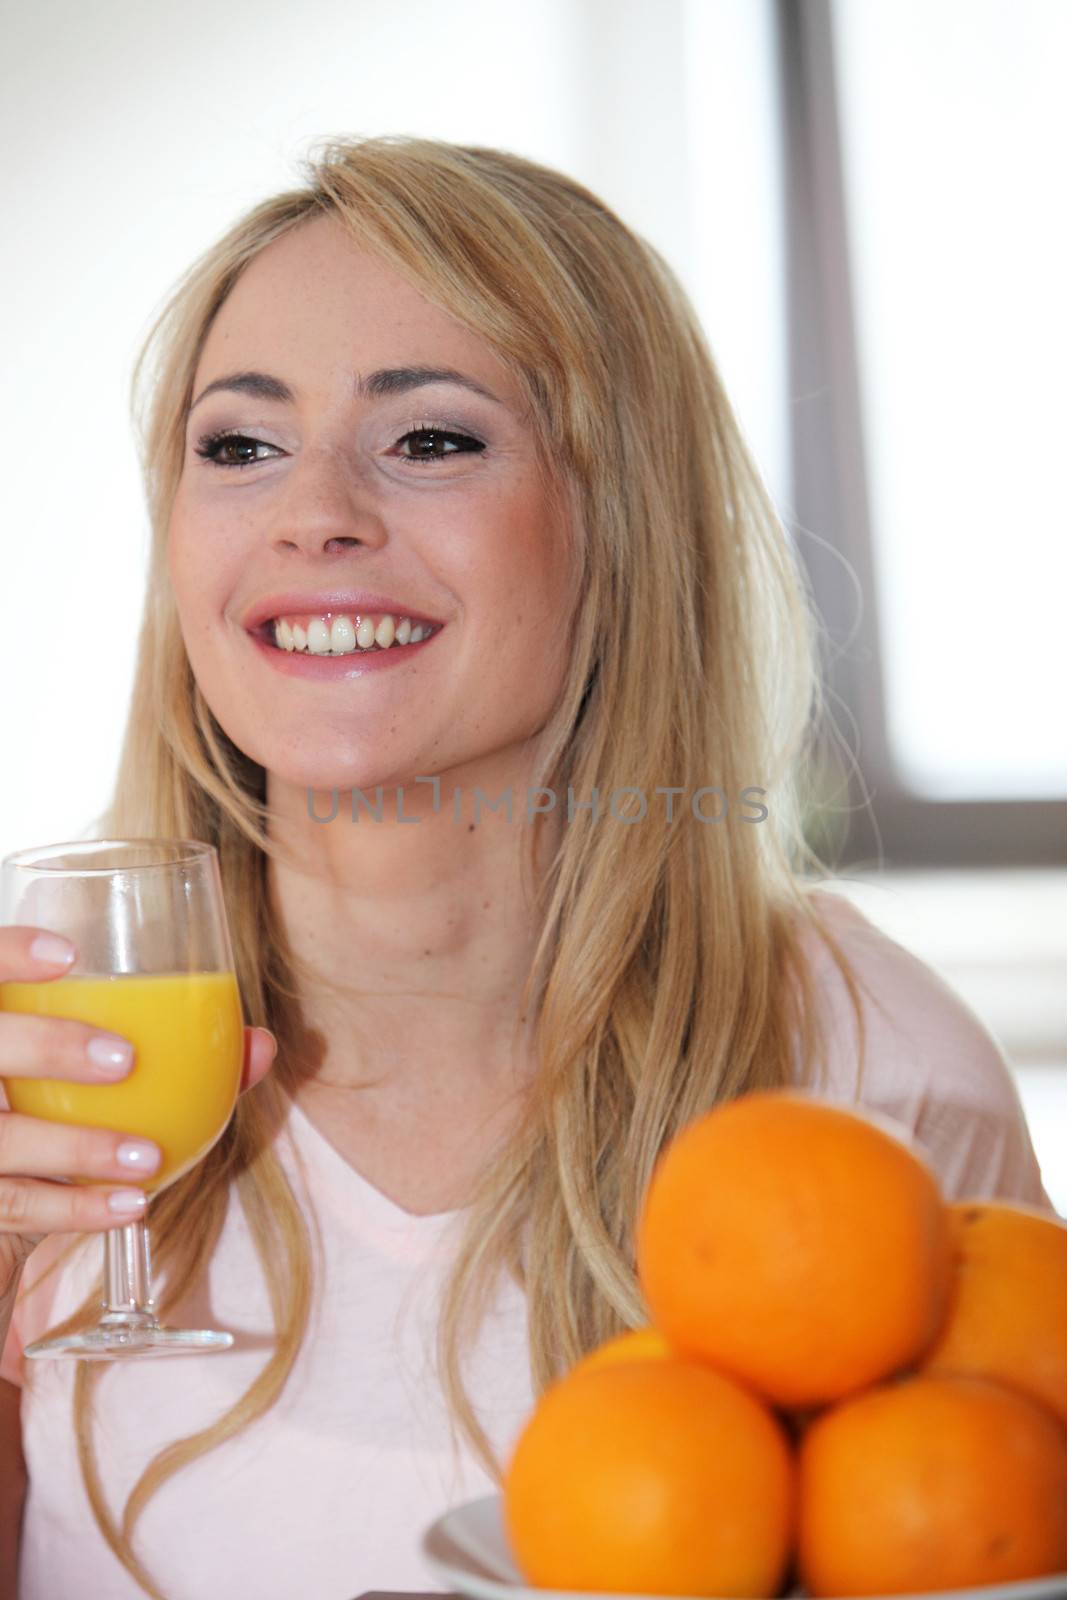 Woman enjoying a glass of fresh orange juice by Farina6000